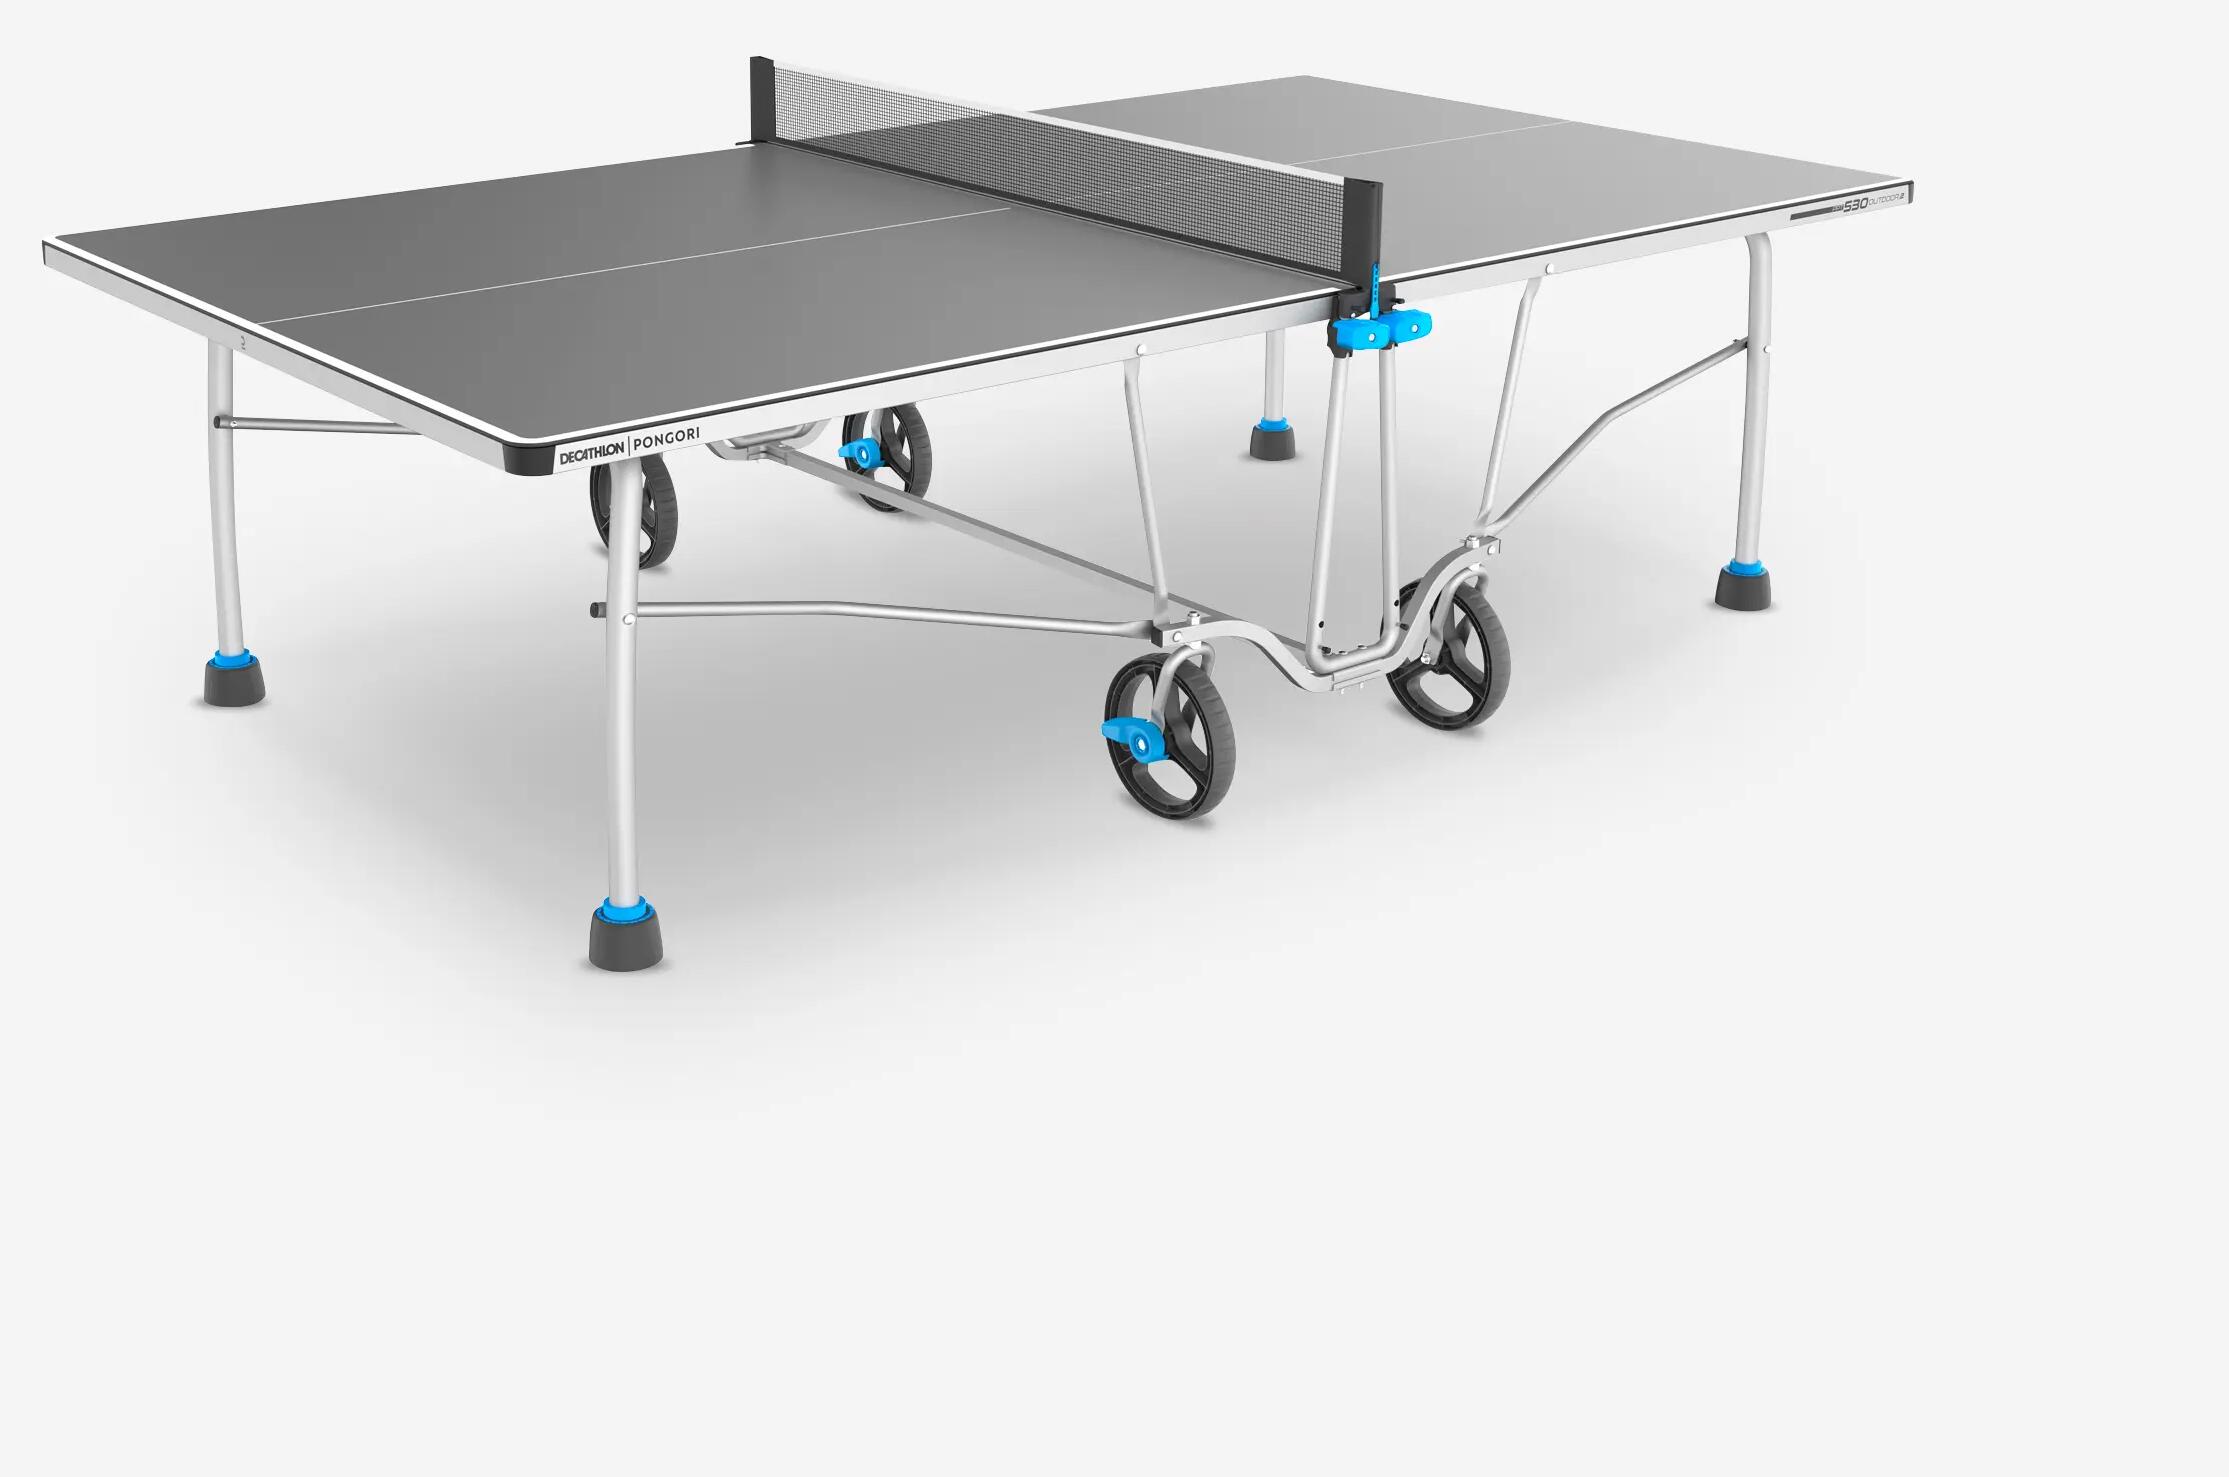 Mesa ping pong exterior plegable tablero 5 mm Pongori PPT 530.2 - Decathlon